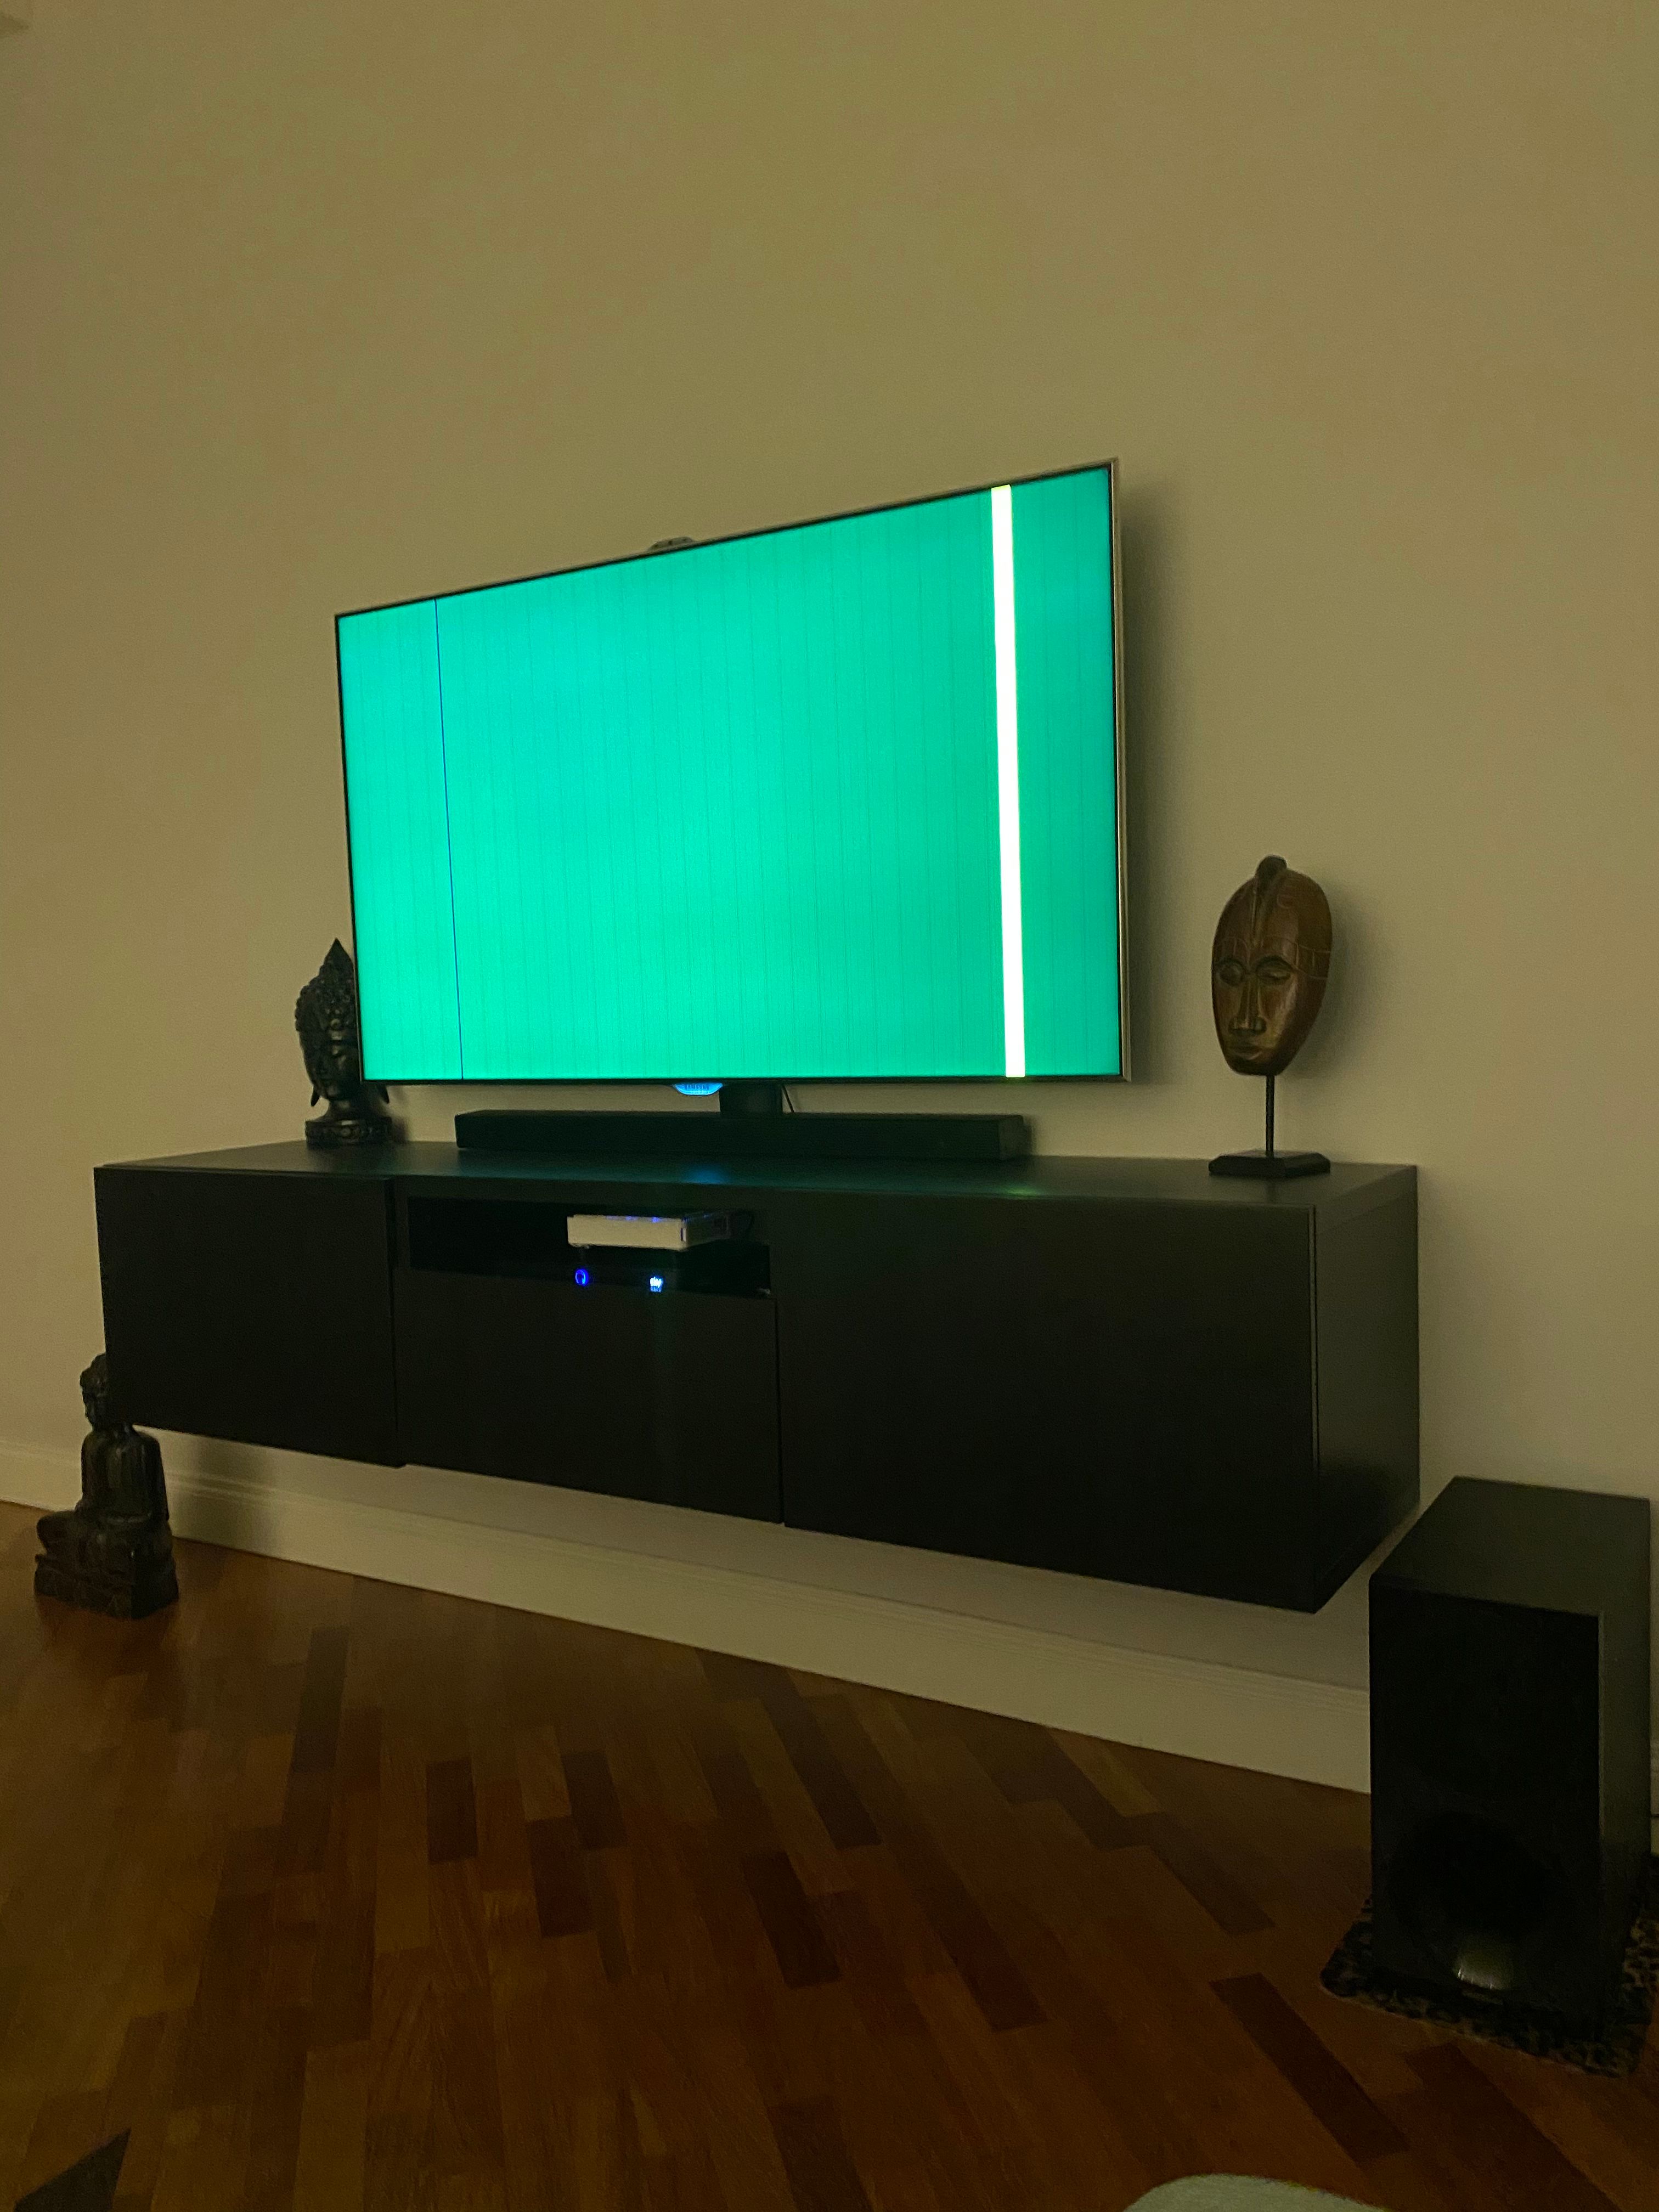 SMART TV UE55ES8000 righe verticali - Samsung Community